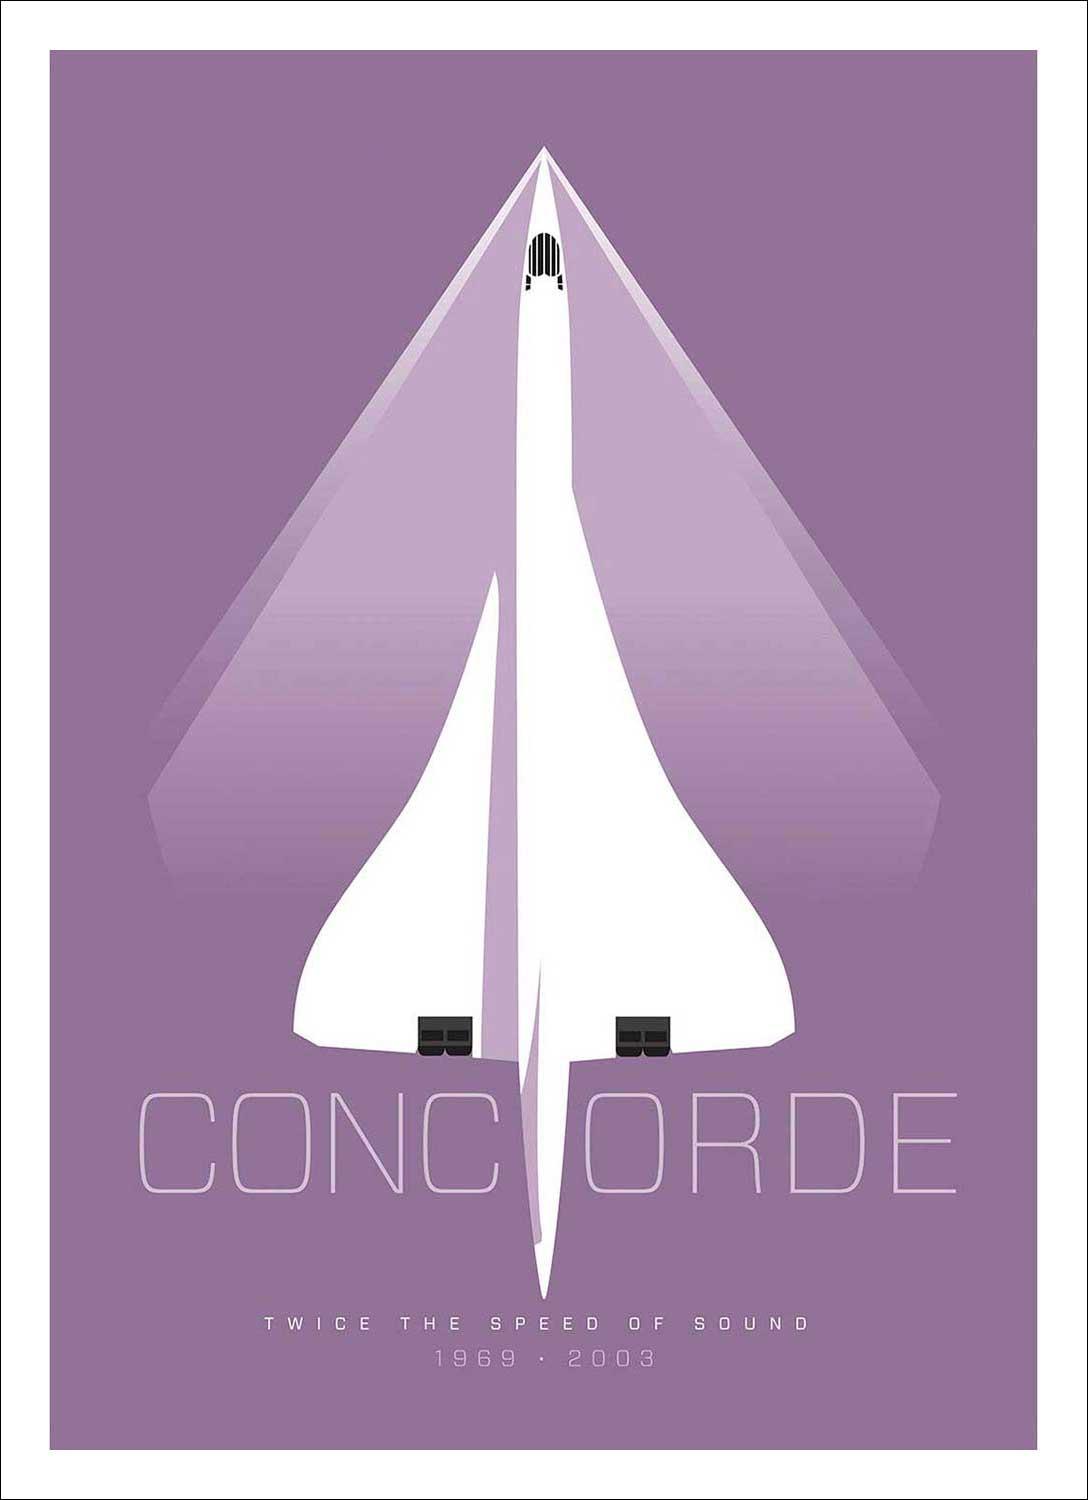 Concorde (Purple) Art Print from an original illustration by artist Peter McDermott